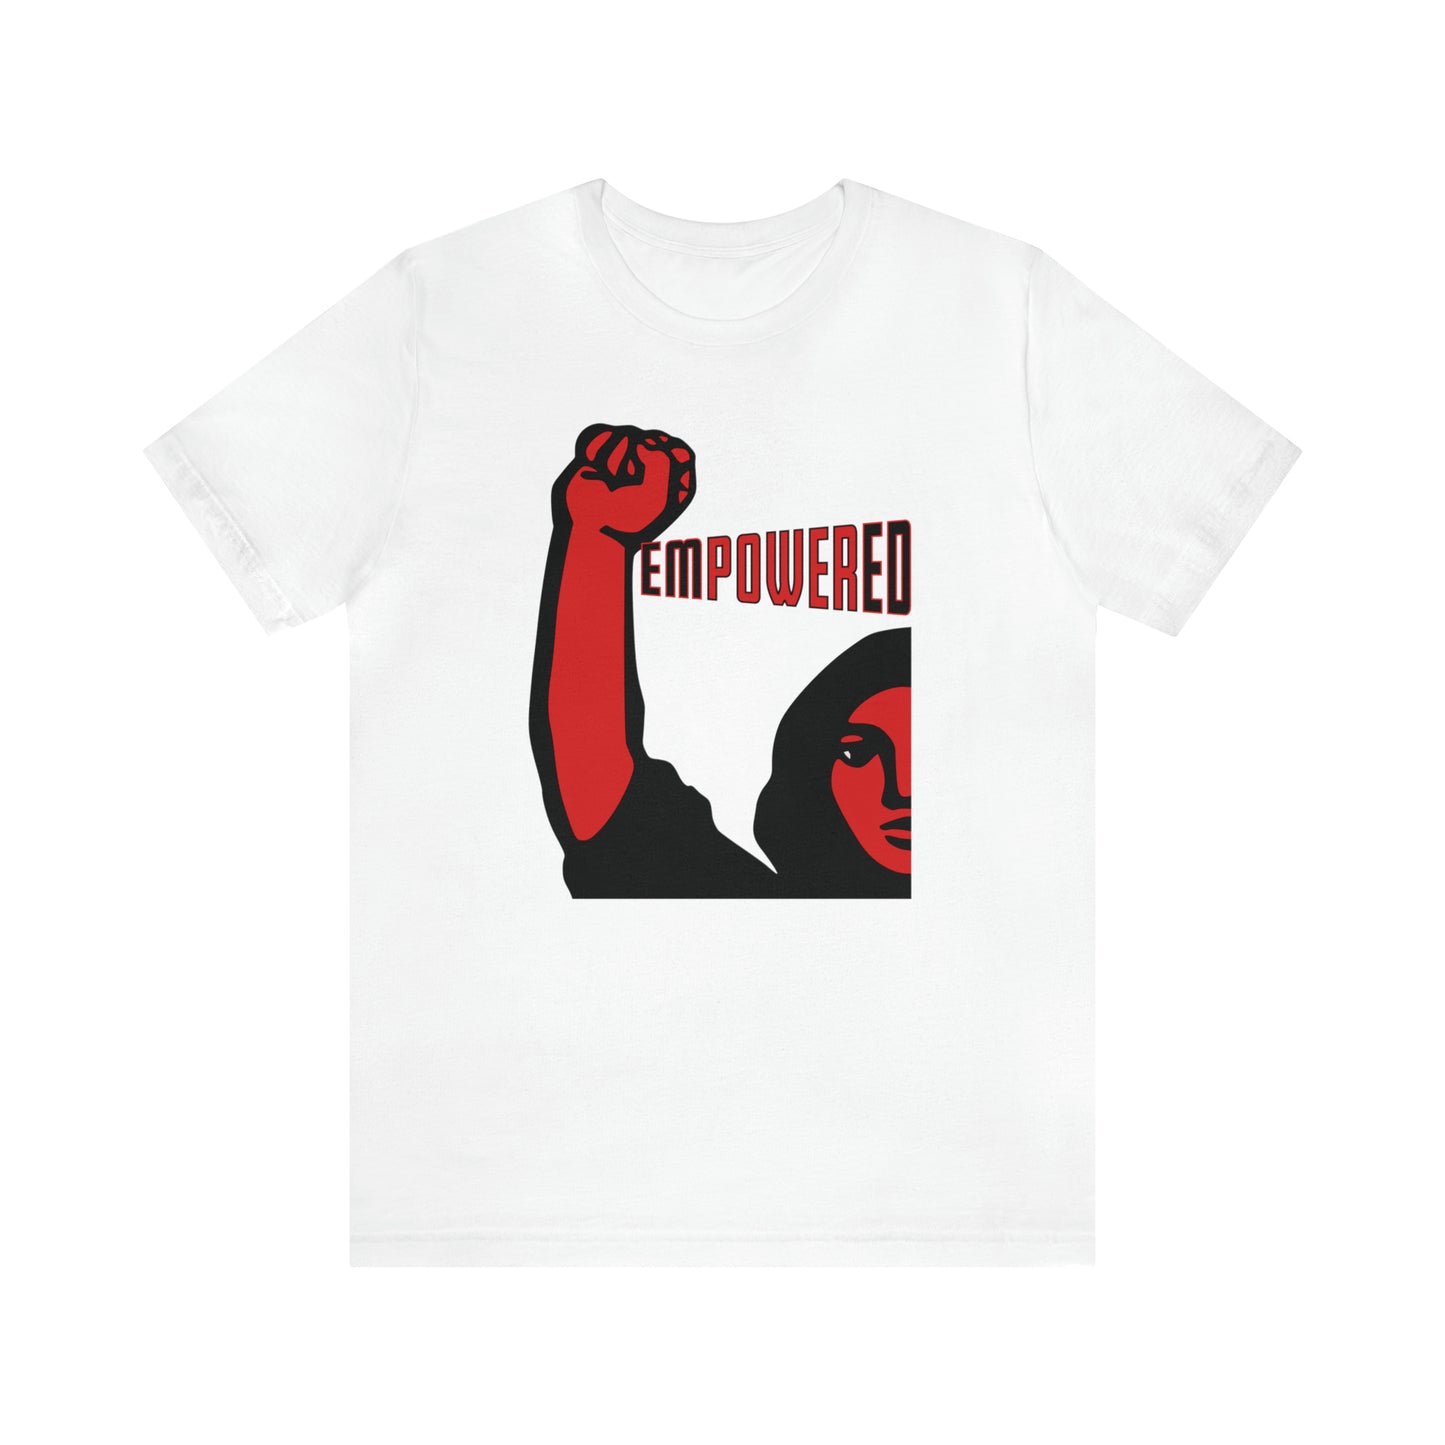 Empowered Women - Unisex T-Shirt